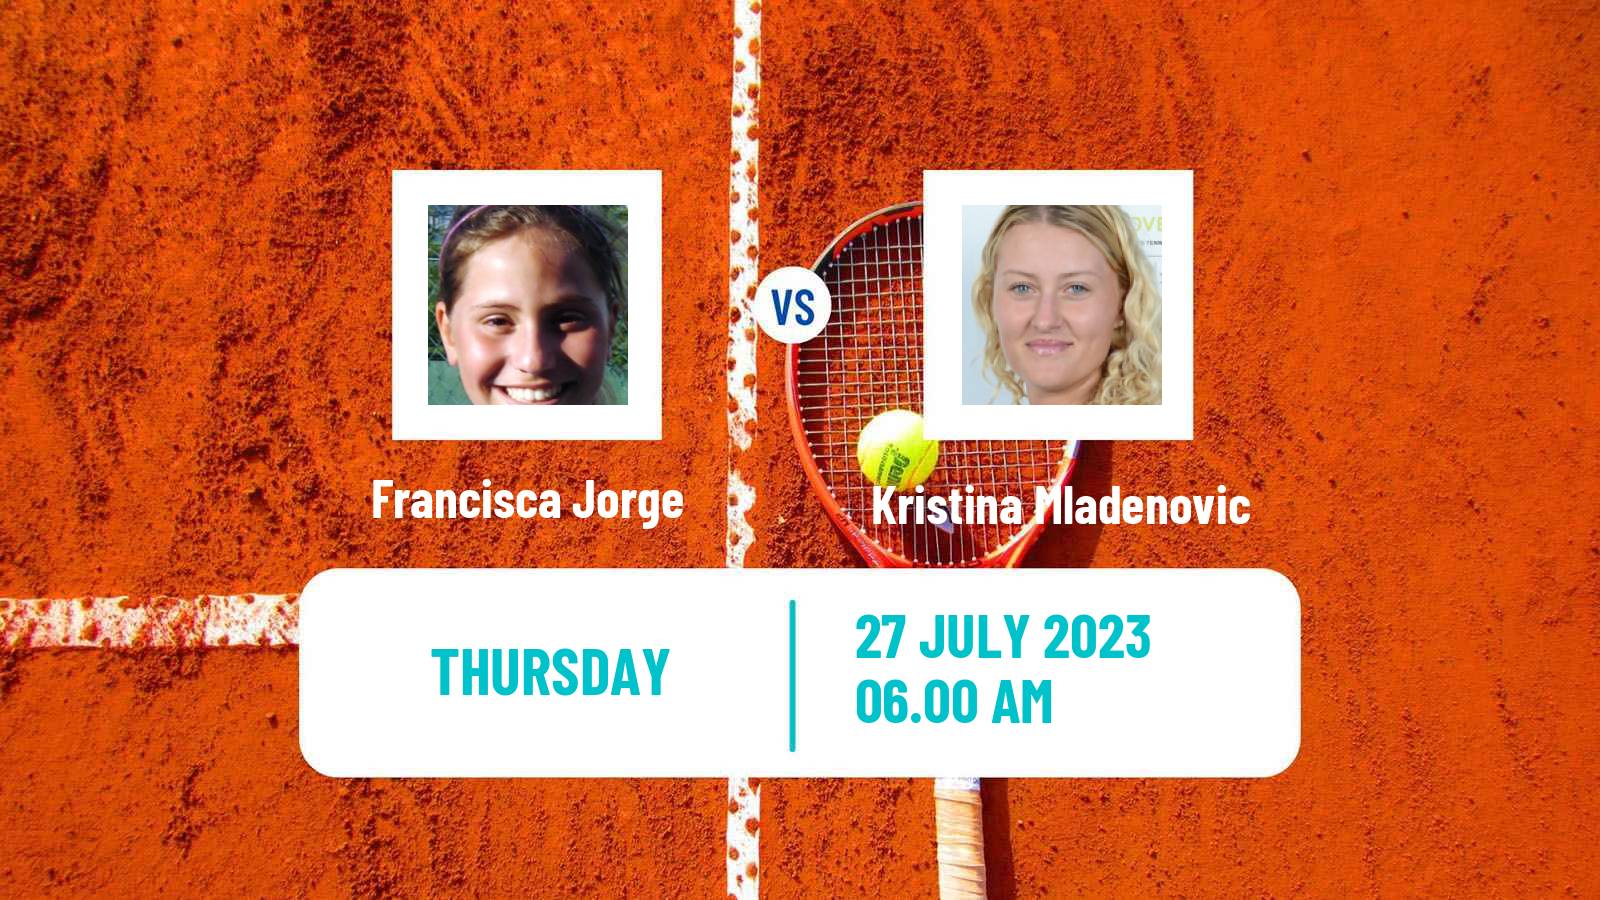 Tennis ITF W100 Figueira Da Foz Women Francisca Jorge - Kristina Mladenovic